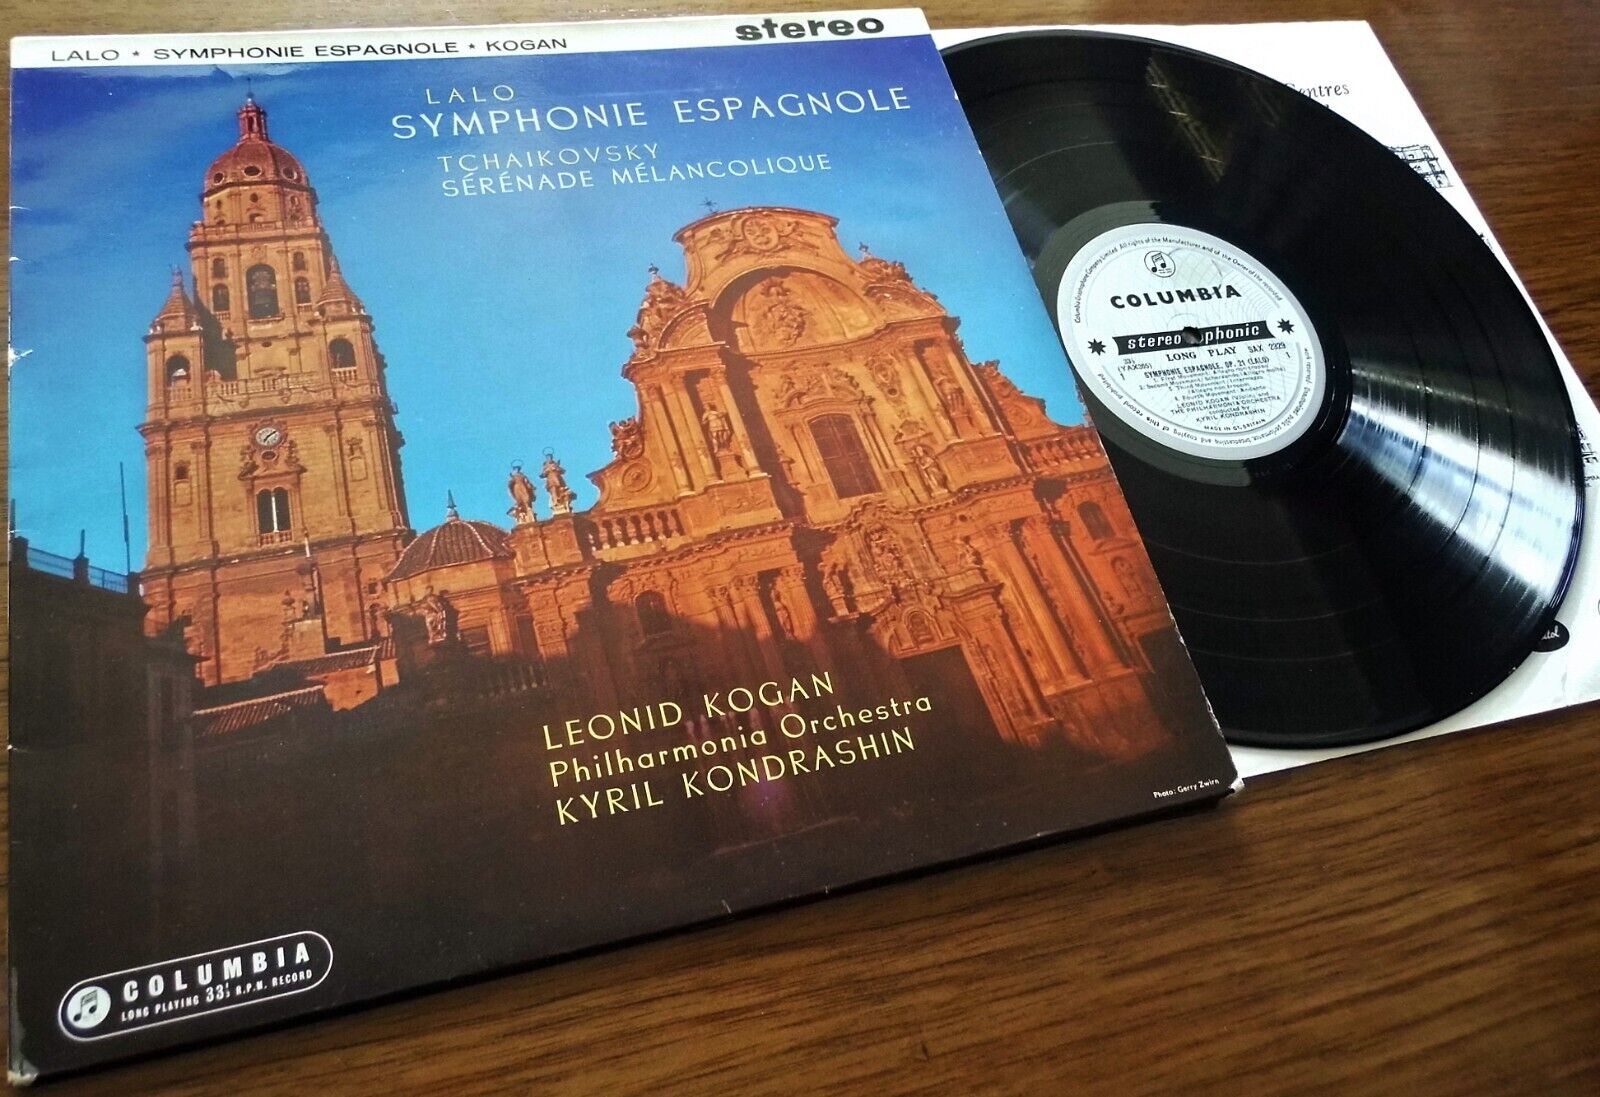 Lalo: Symphonie Espagnole - Leonid Kogan **Columbia SAX 2329 ED1 LP**